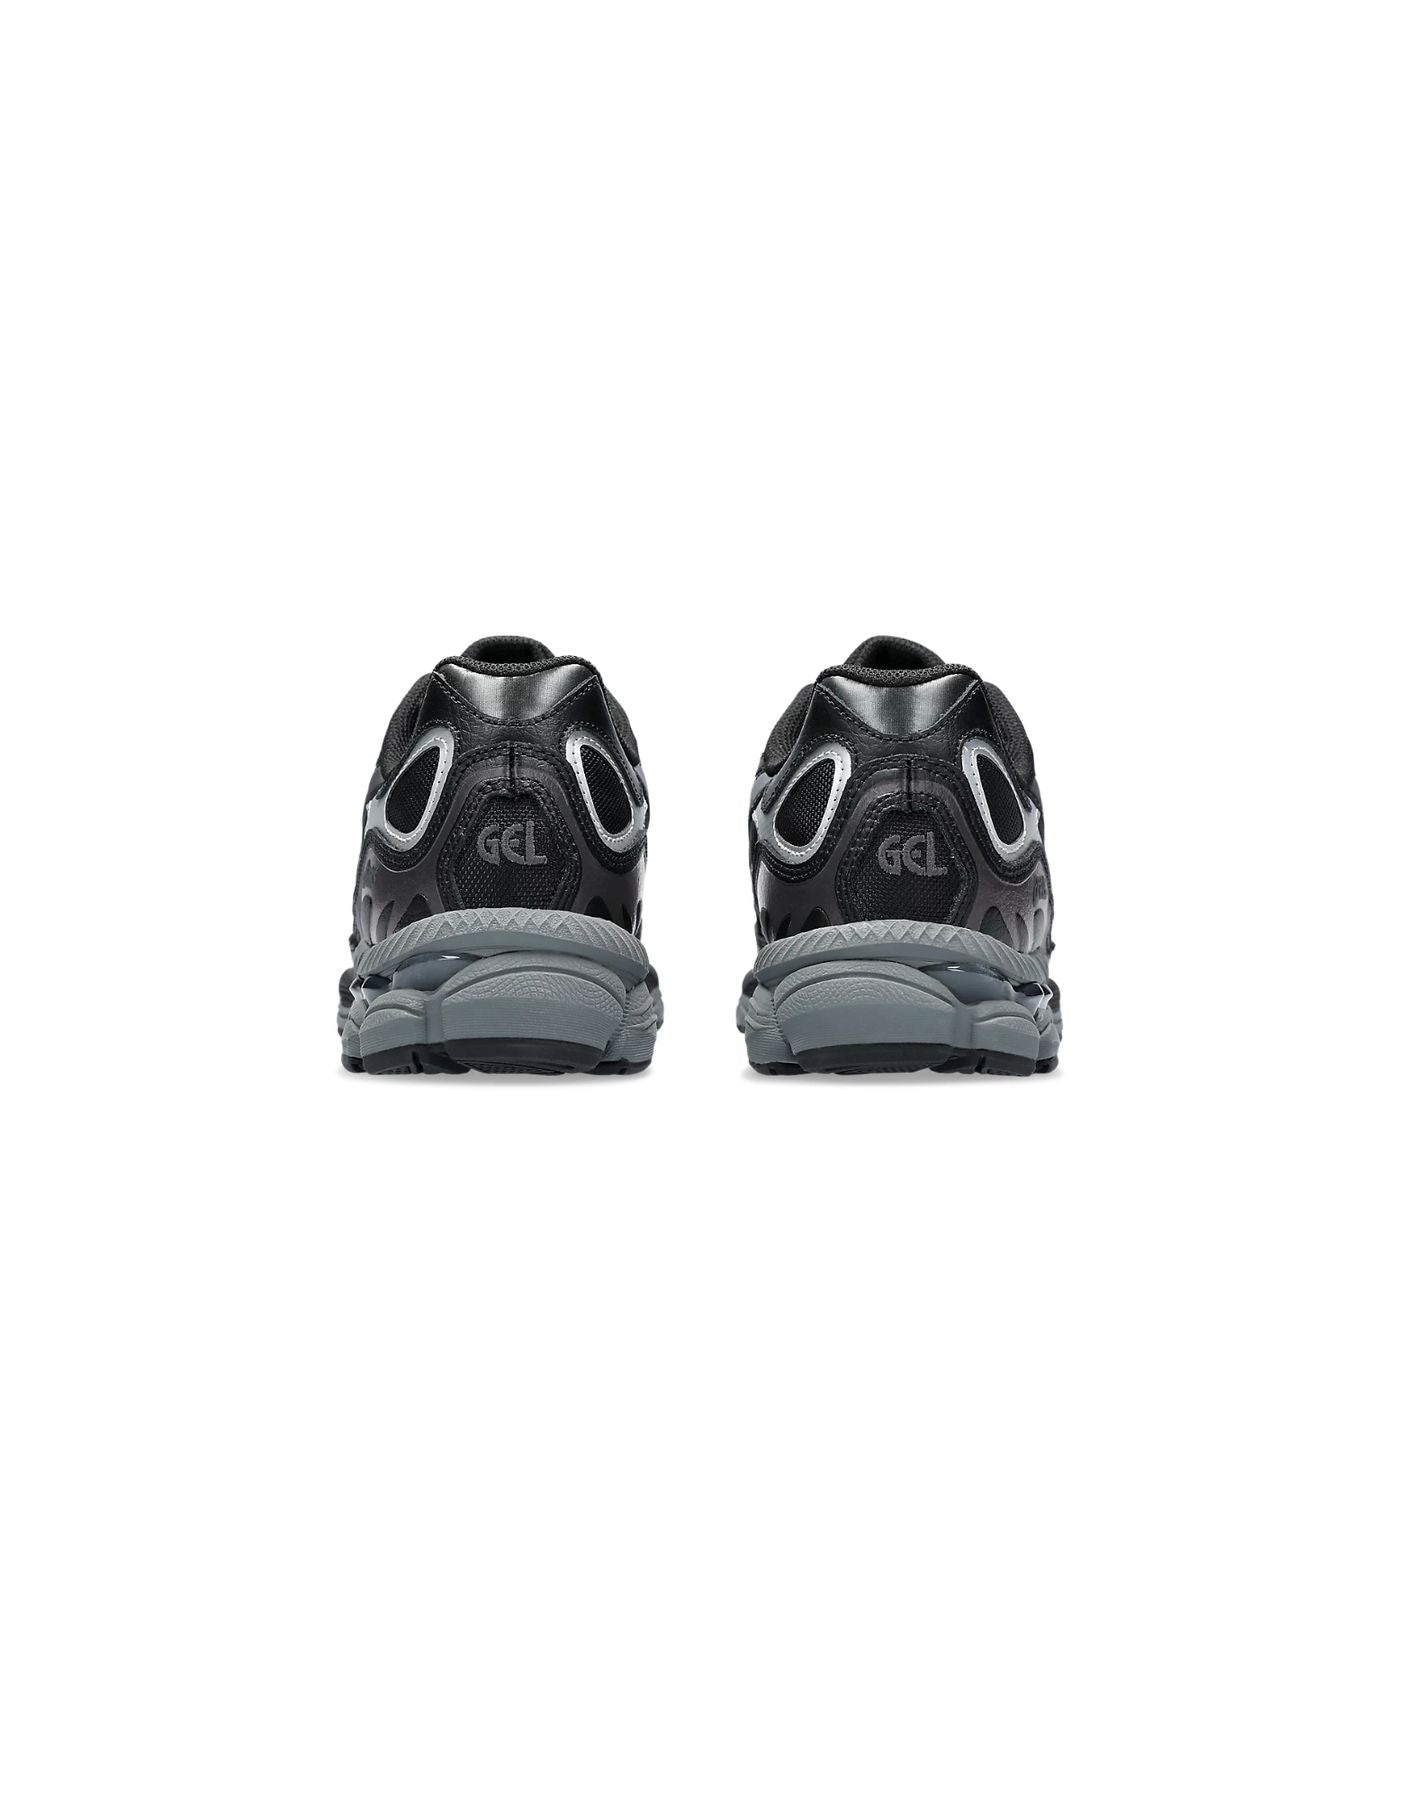 Chaussures pour homme gel-nyc gris / noir ASICS